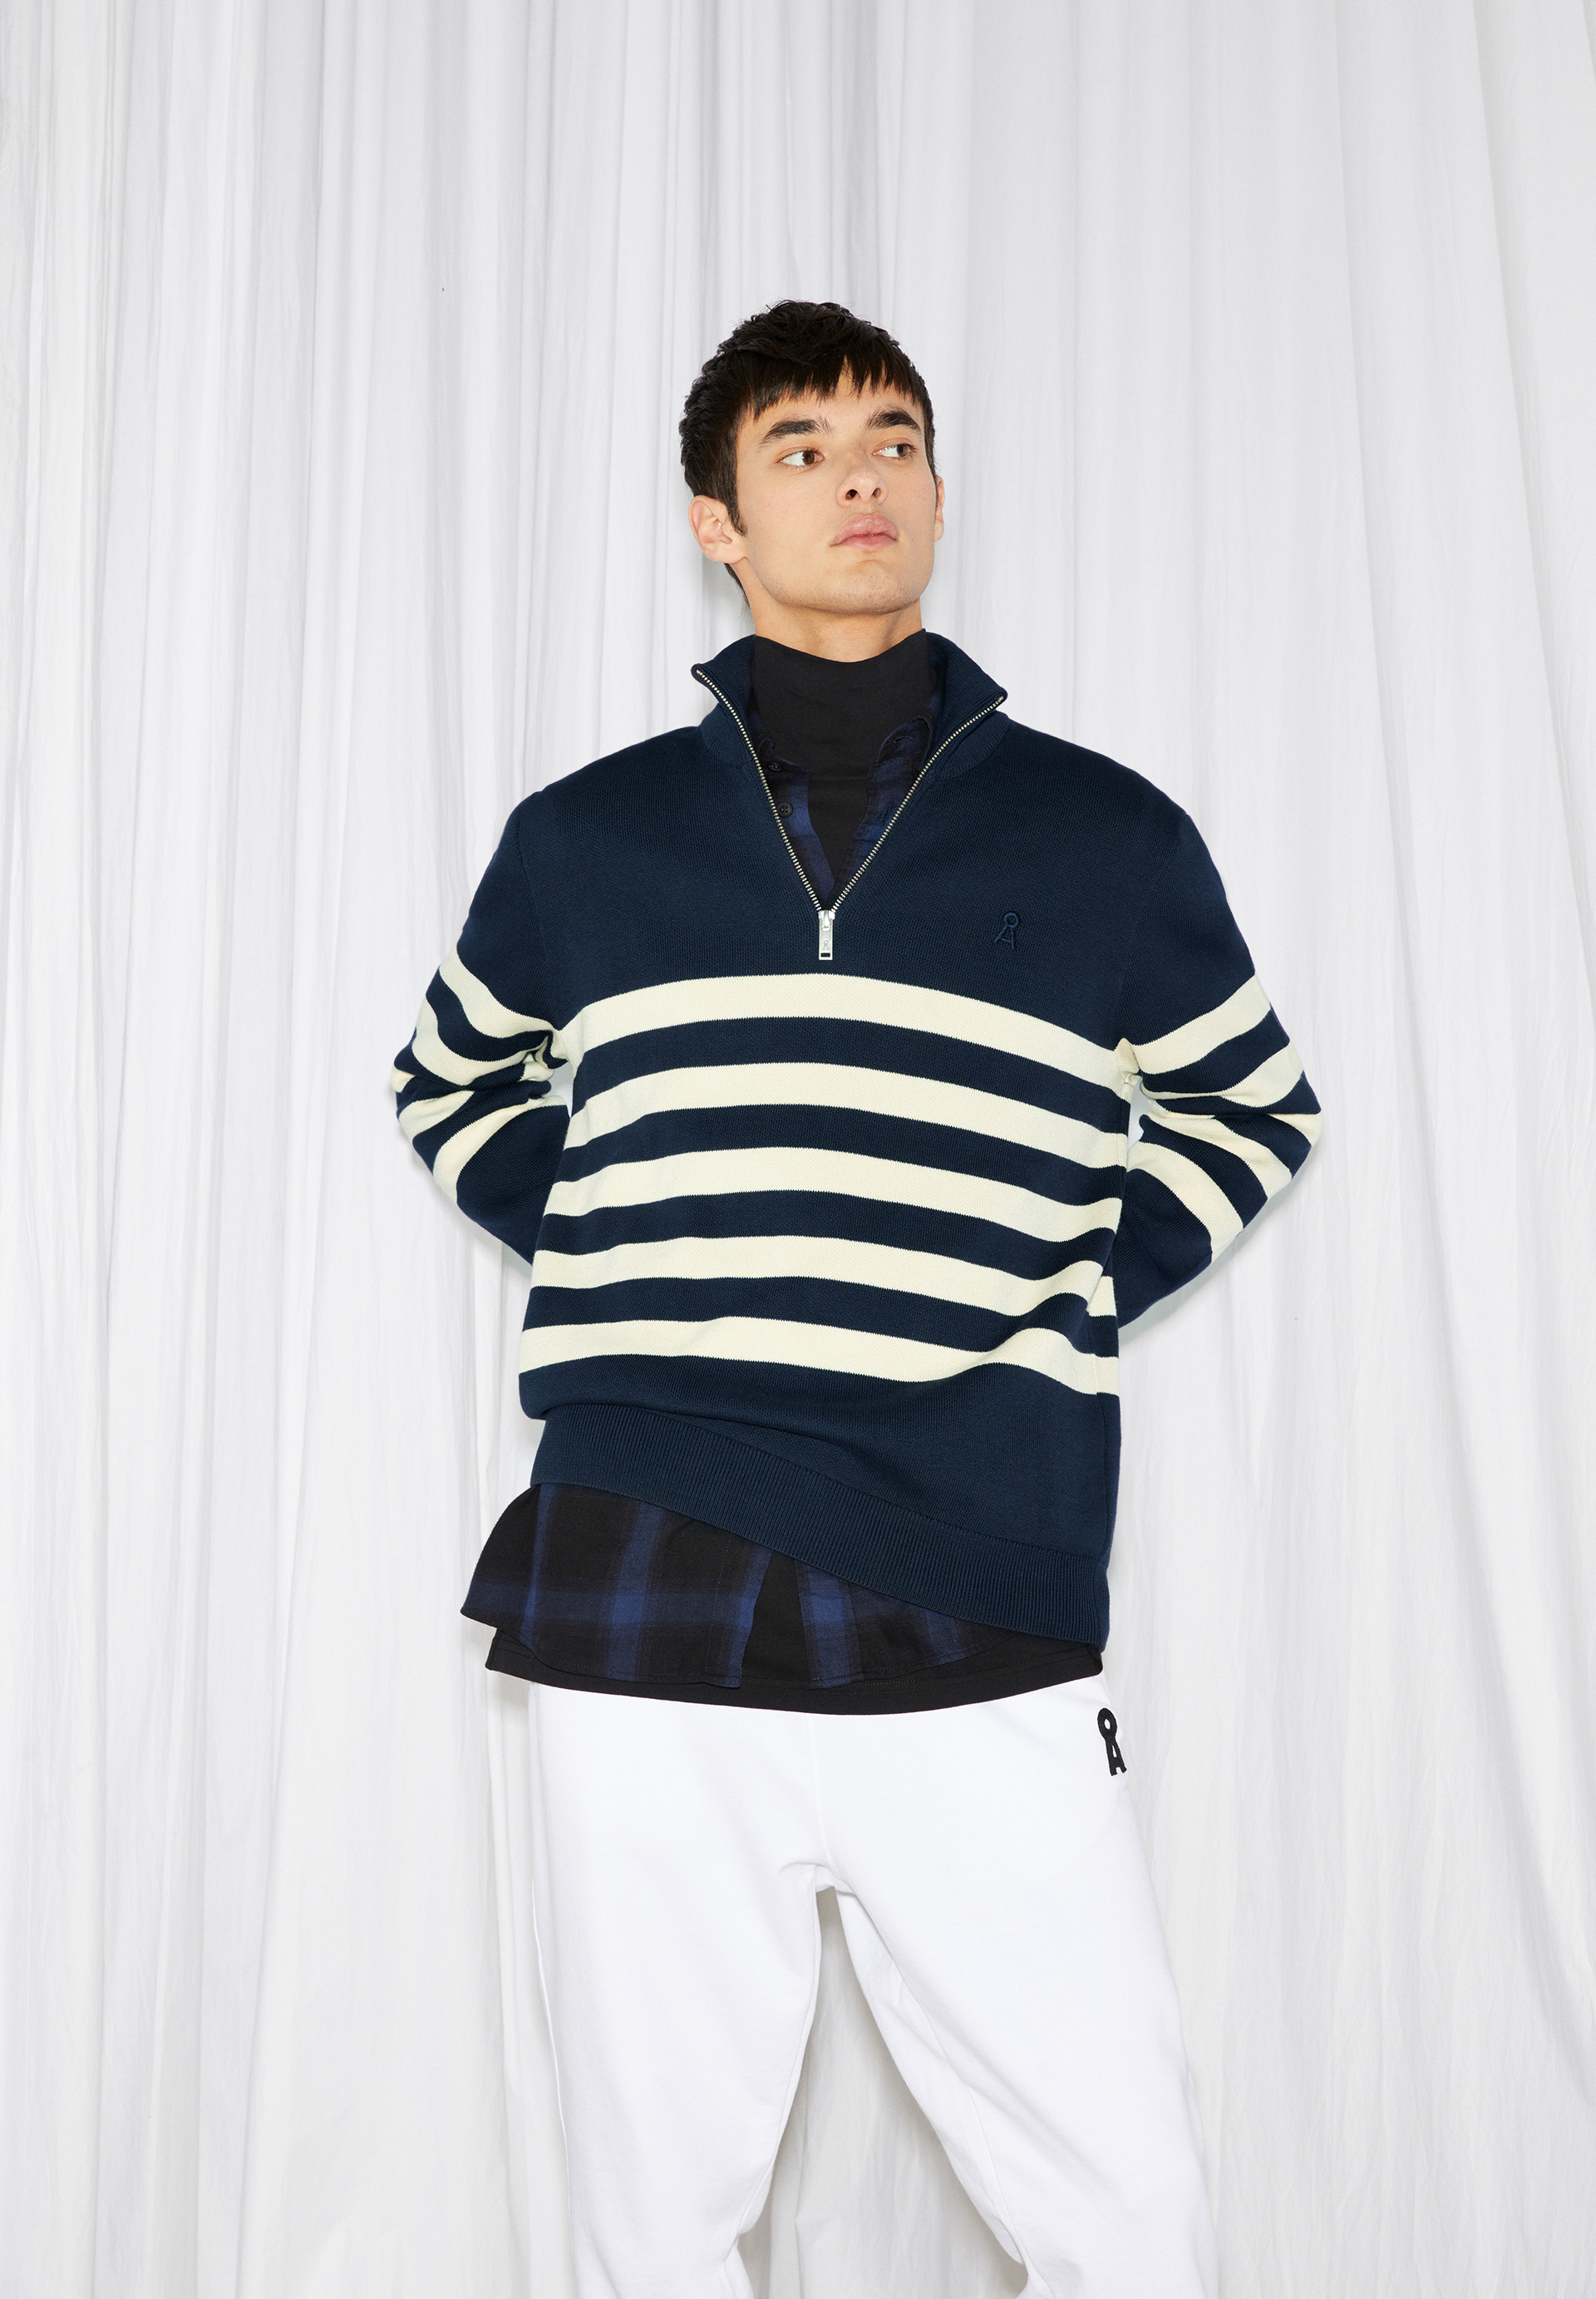 AALFREDOS Sweater Regular Fit made of Organic Cotton